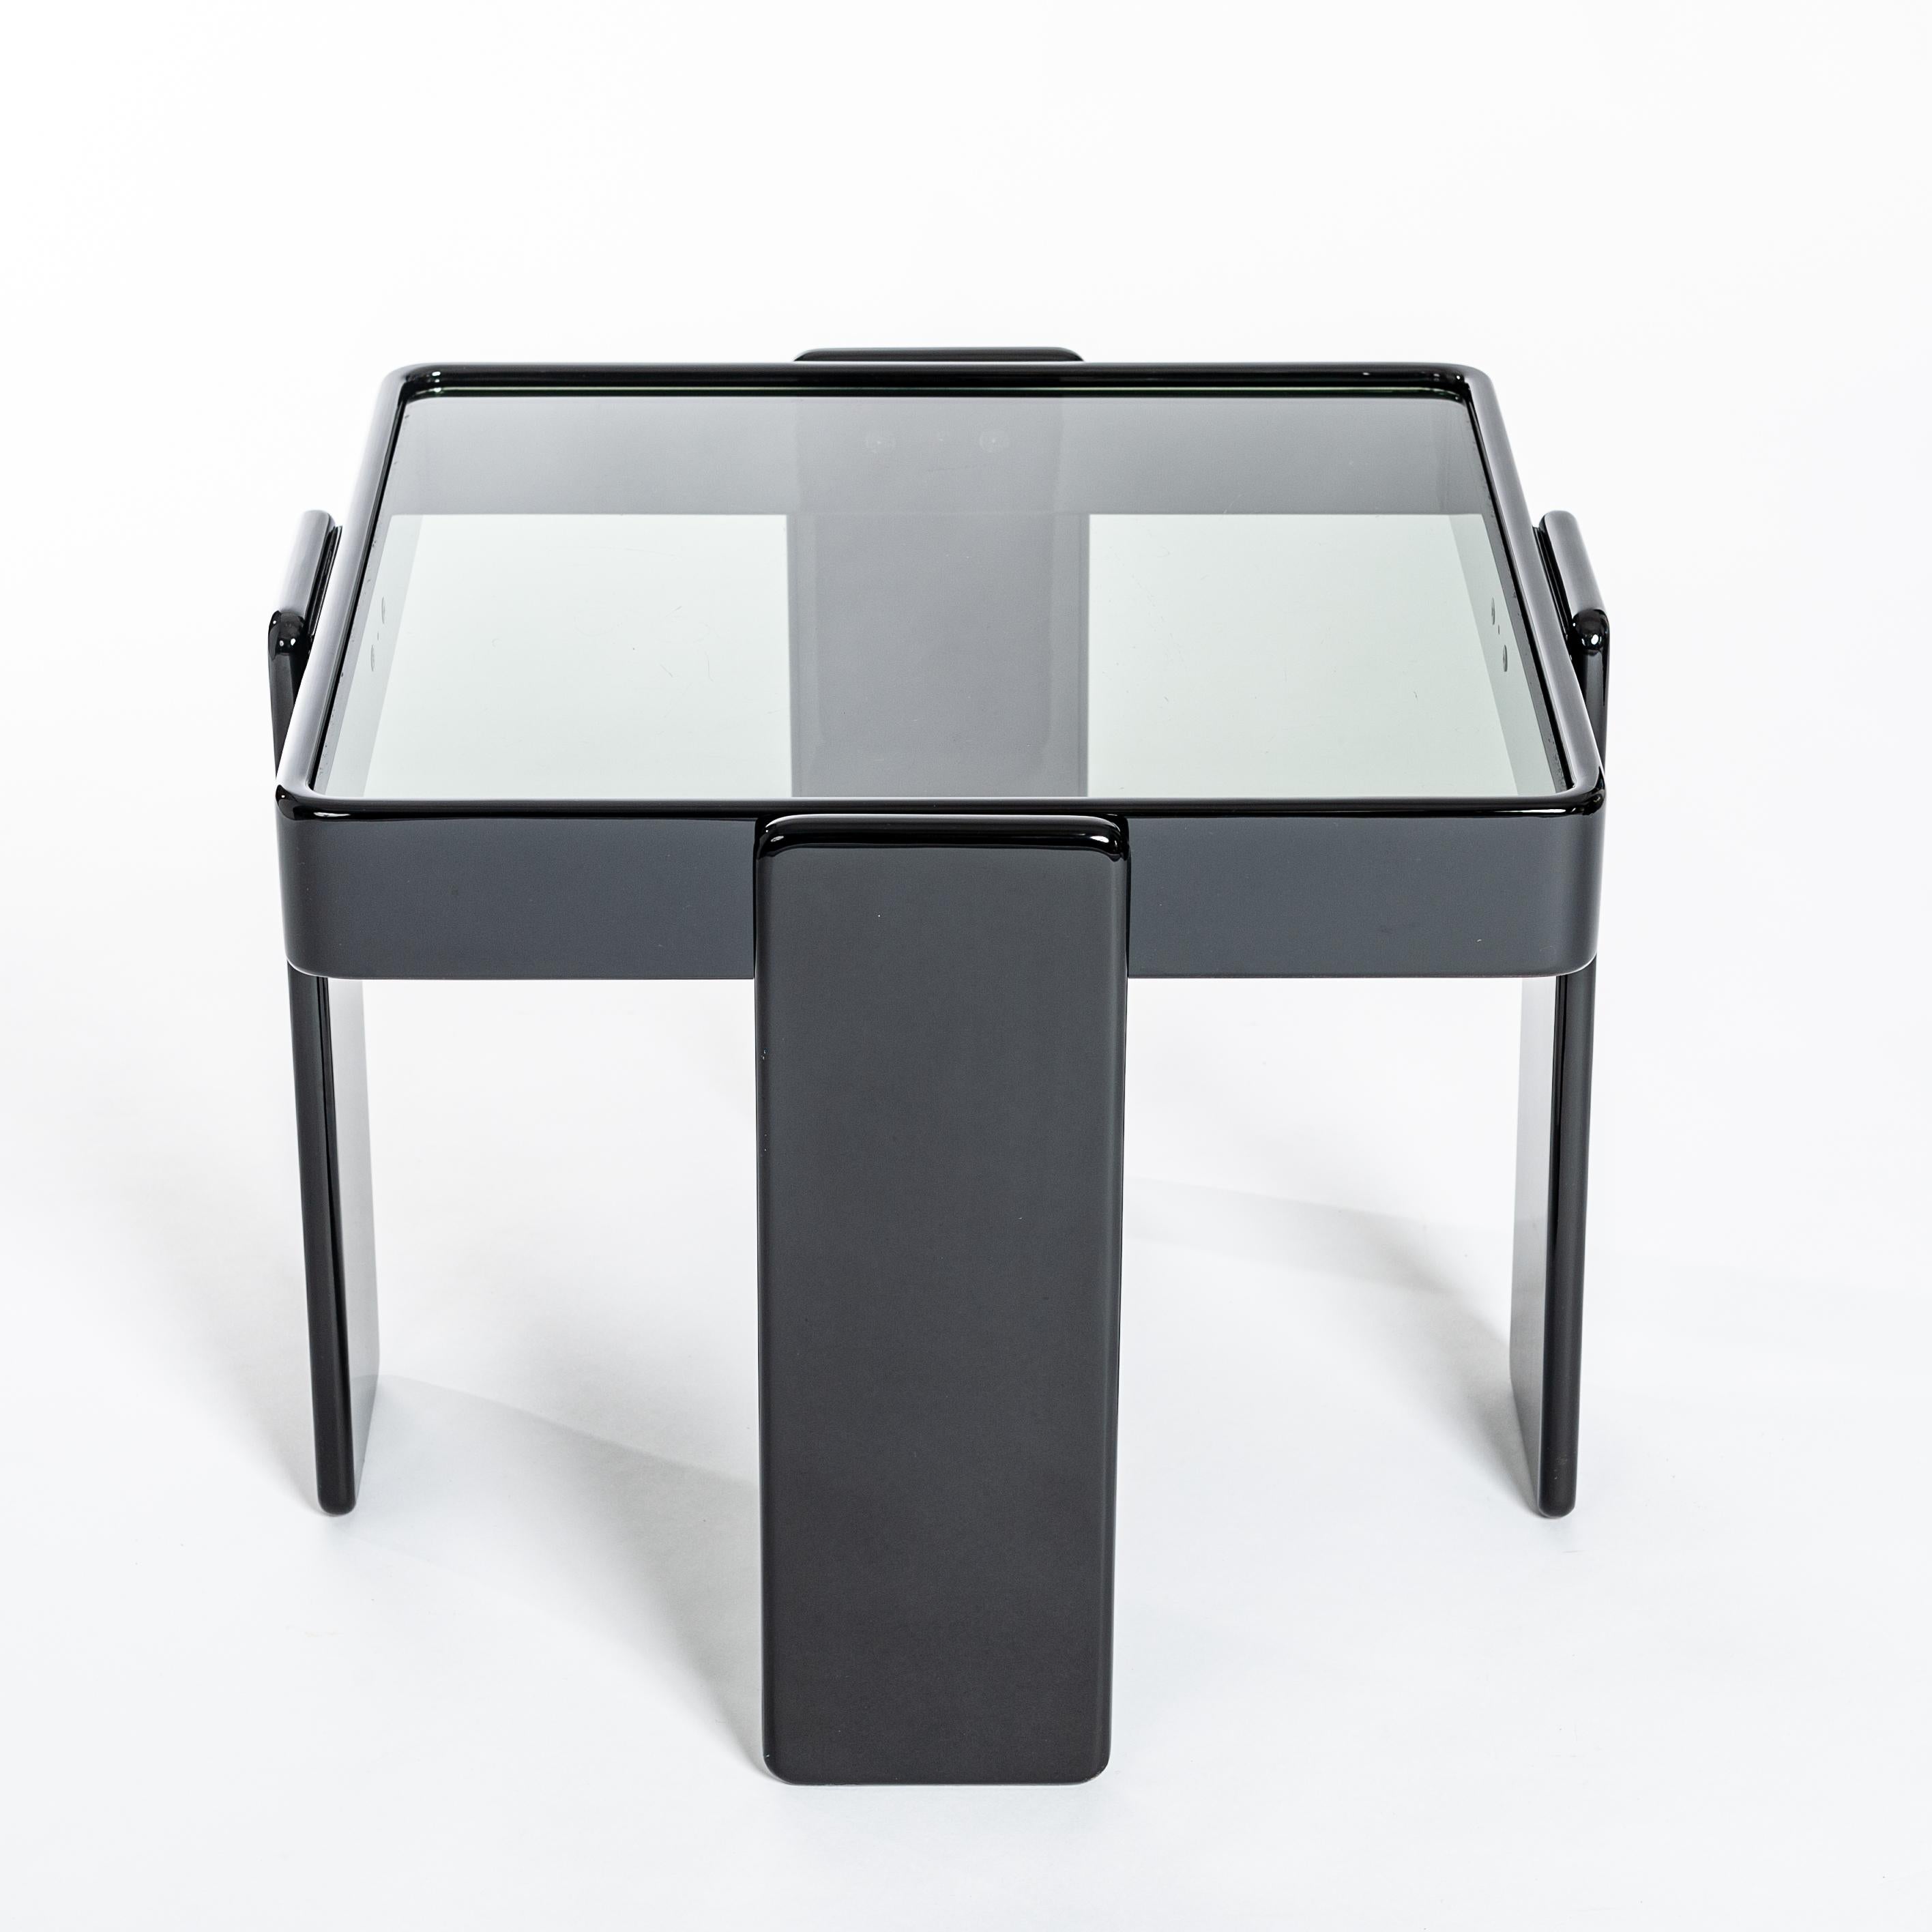 Italian Midcentury Gianfranco Frattini Black Nesting Tables for Cassina, 1960s For Sale 2